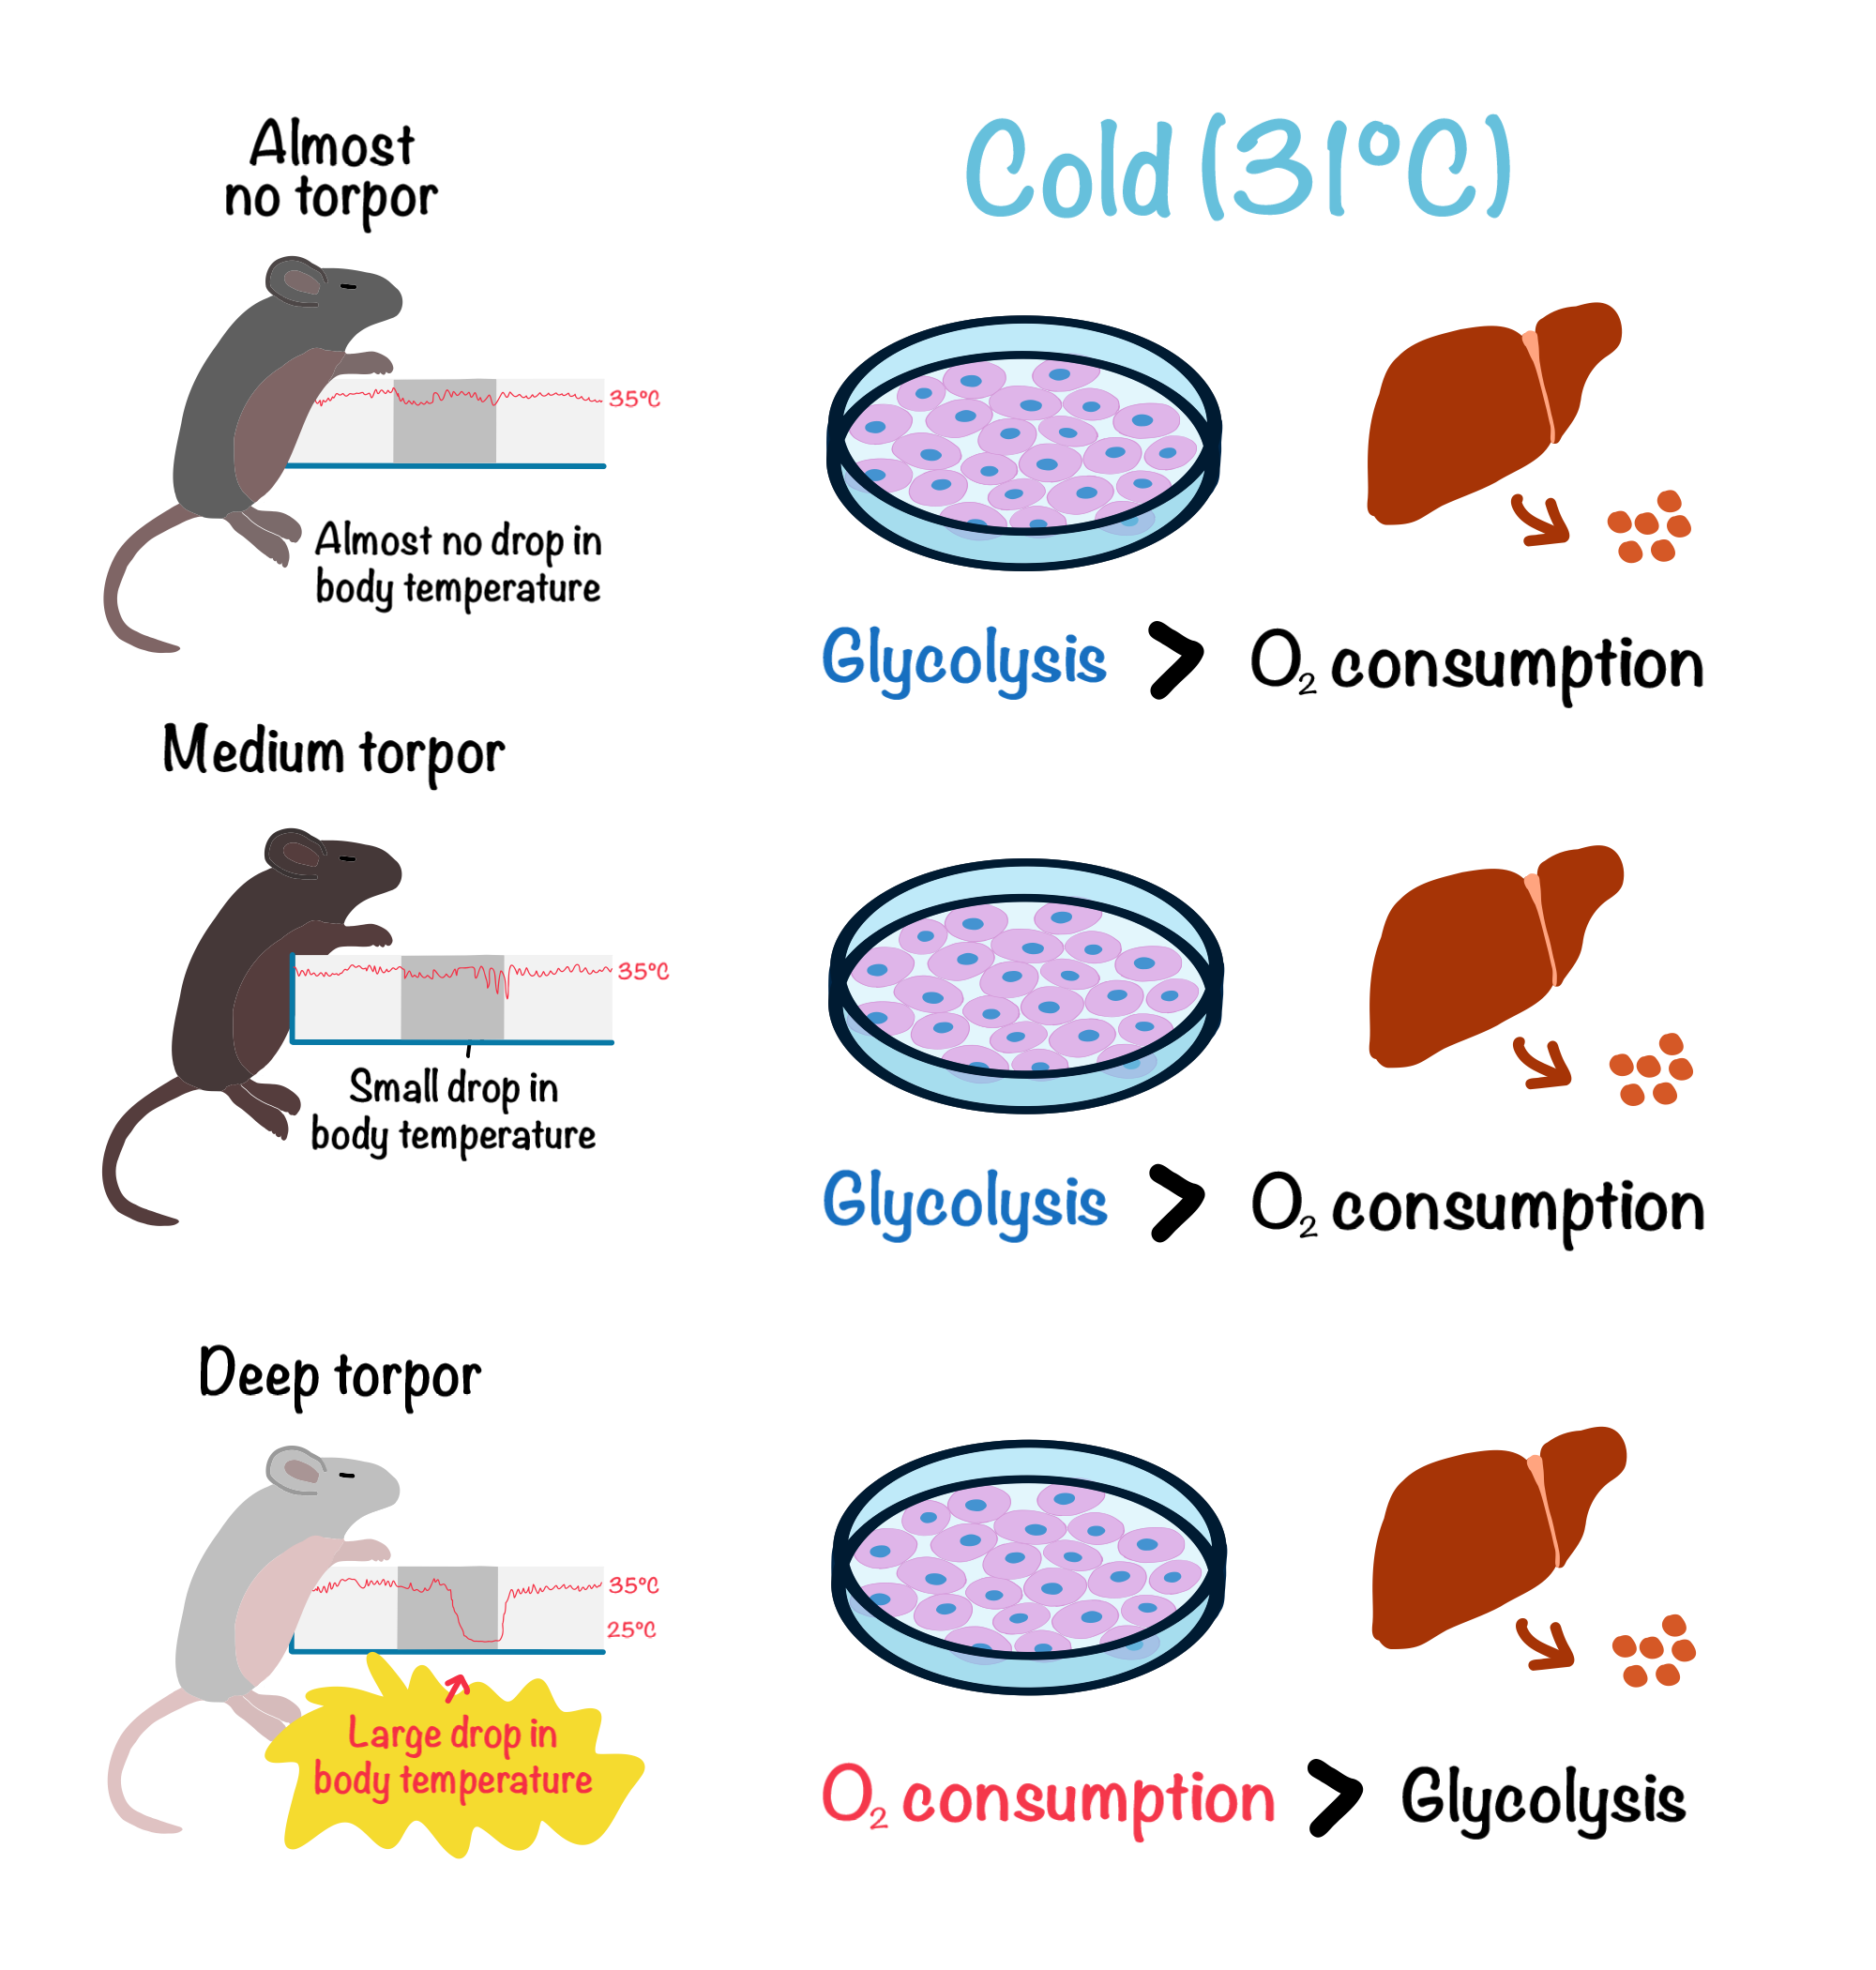 stem cells from deep torpor mice resist cold